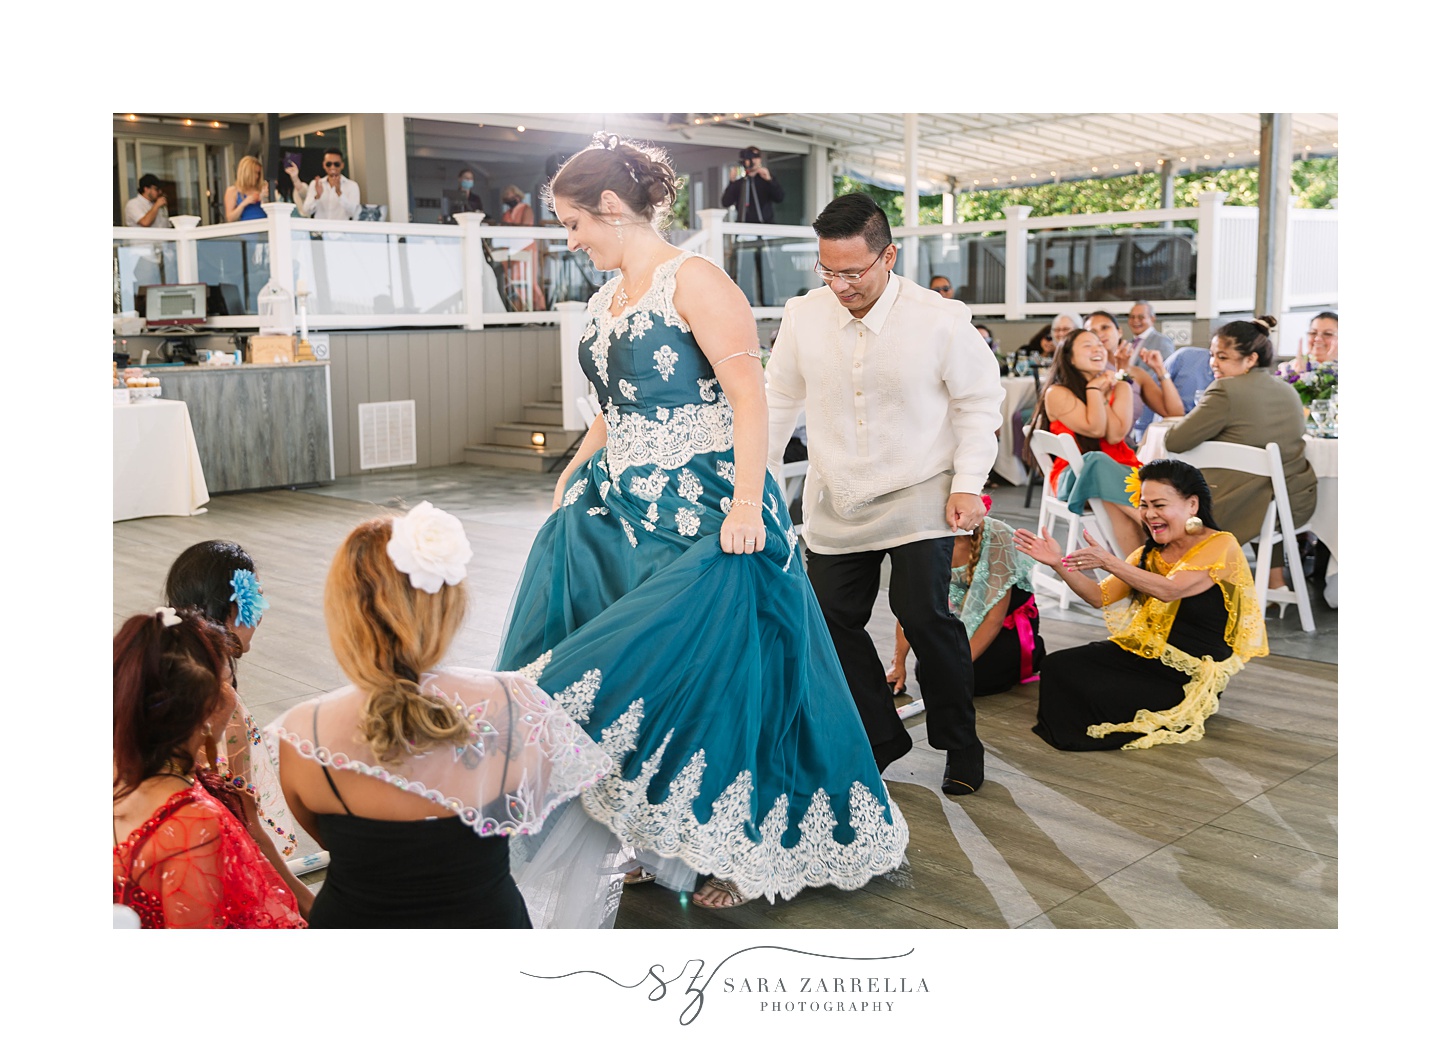 traditional Filipino dancing during wedding reception